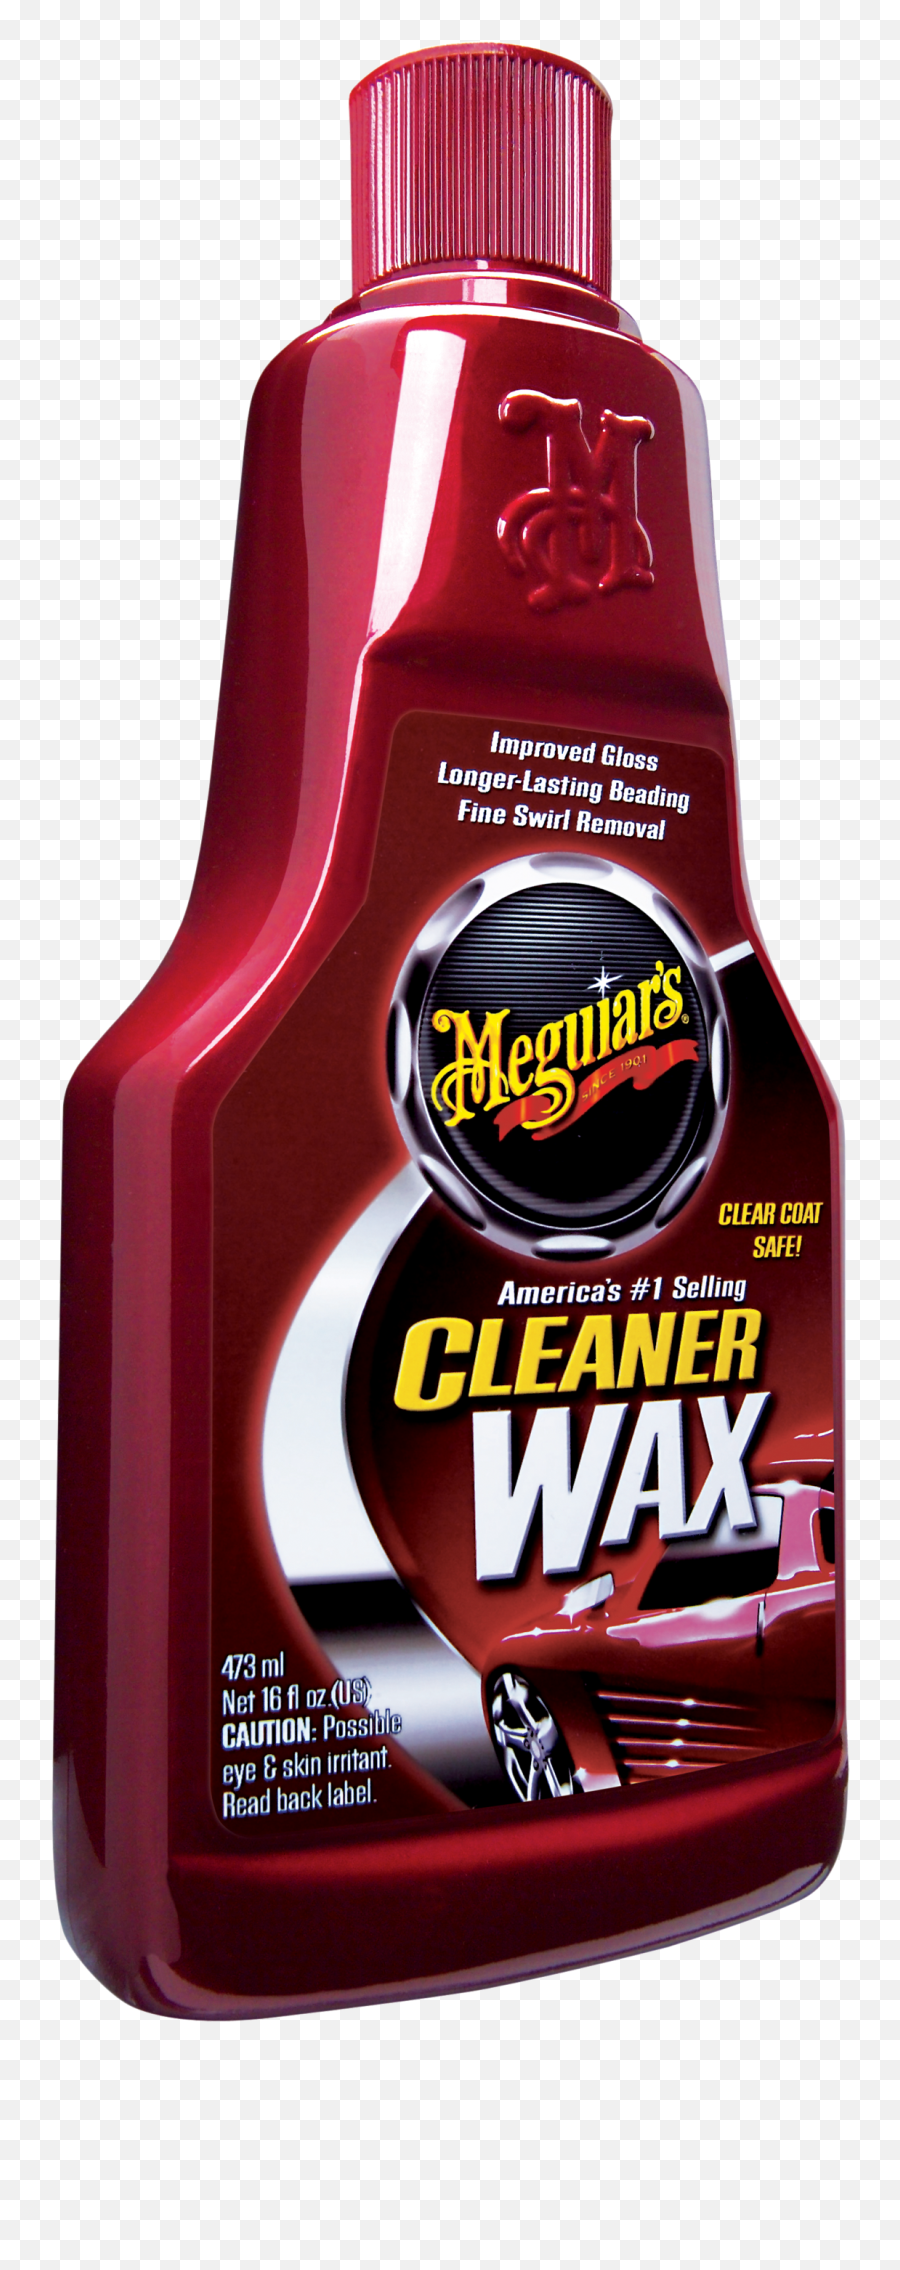 Meguiaru0027s Cleaner Wax A1216 16 Oz Liquid Meguiaru0027s - Cleaner Wax Emoji,Autozone Logo